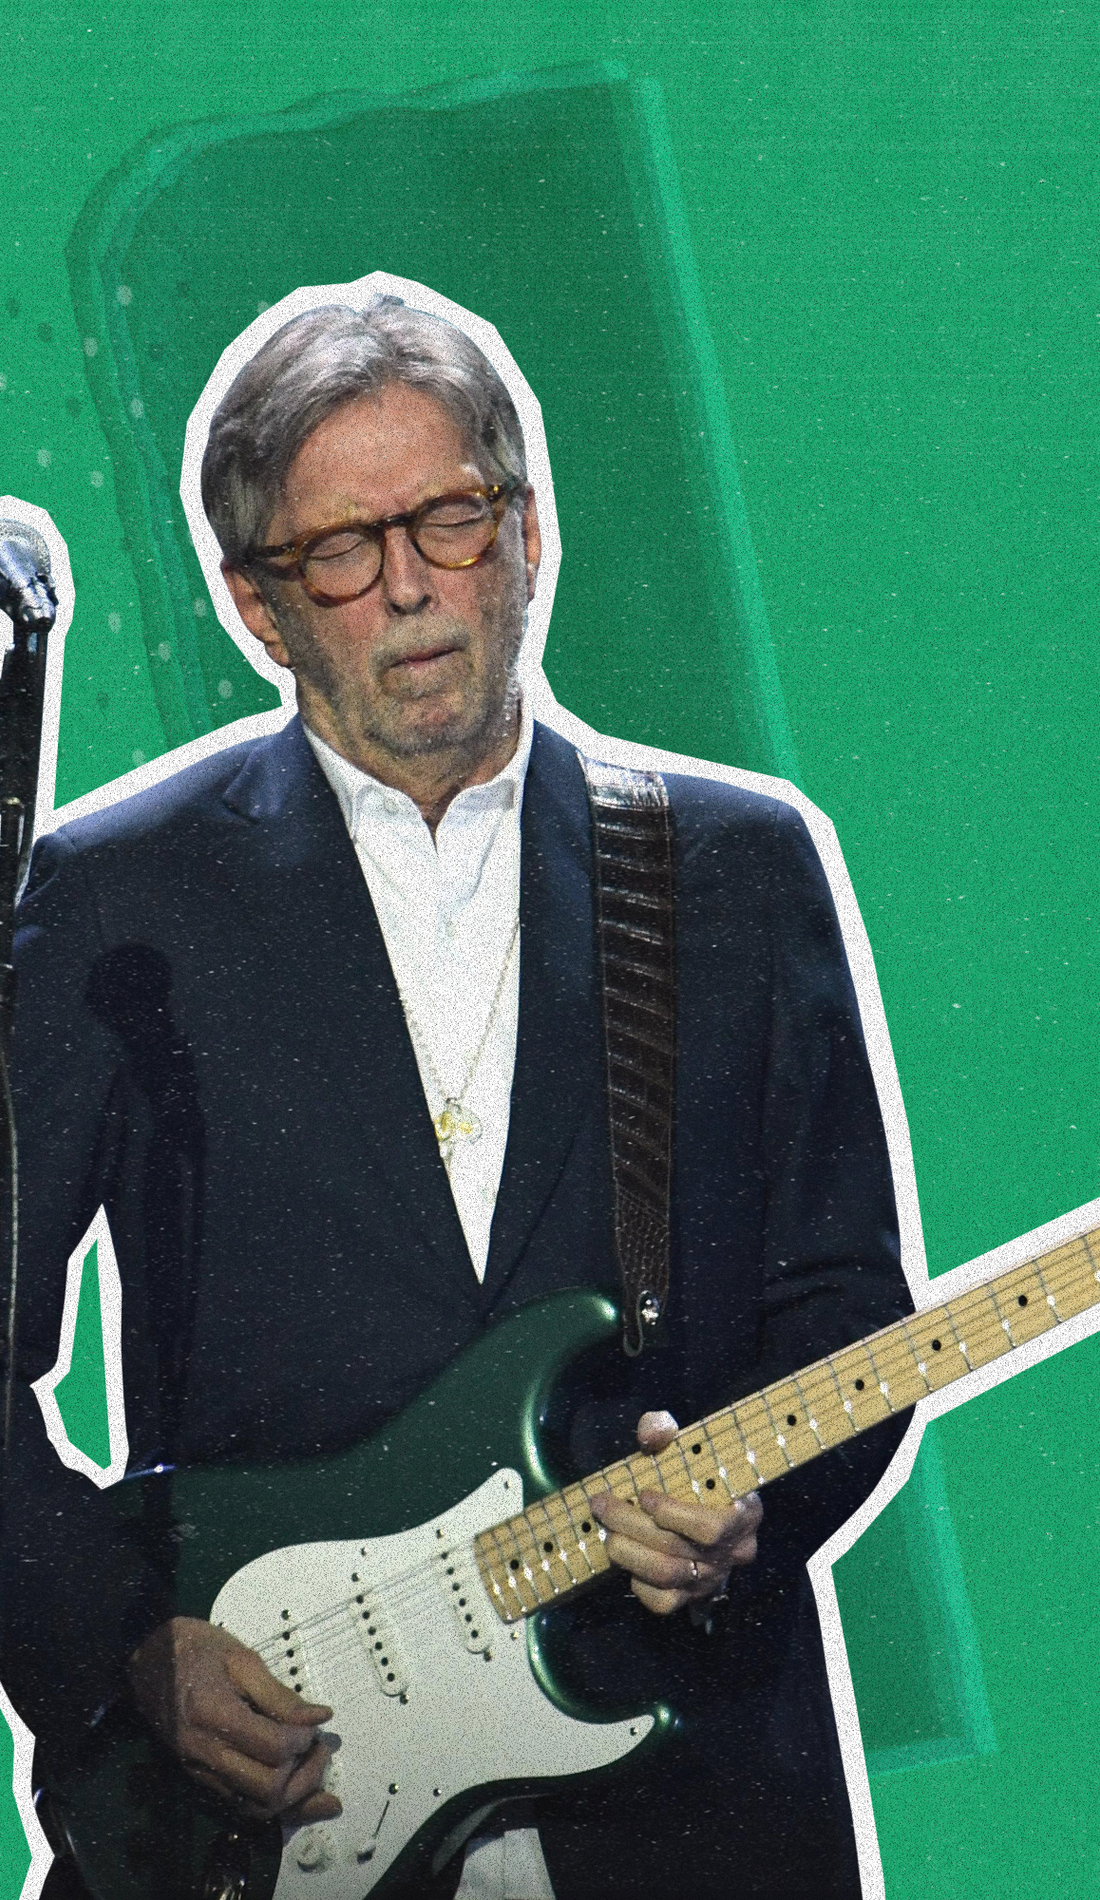 A Eric Clapton live event